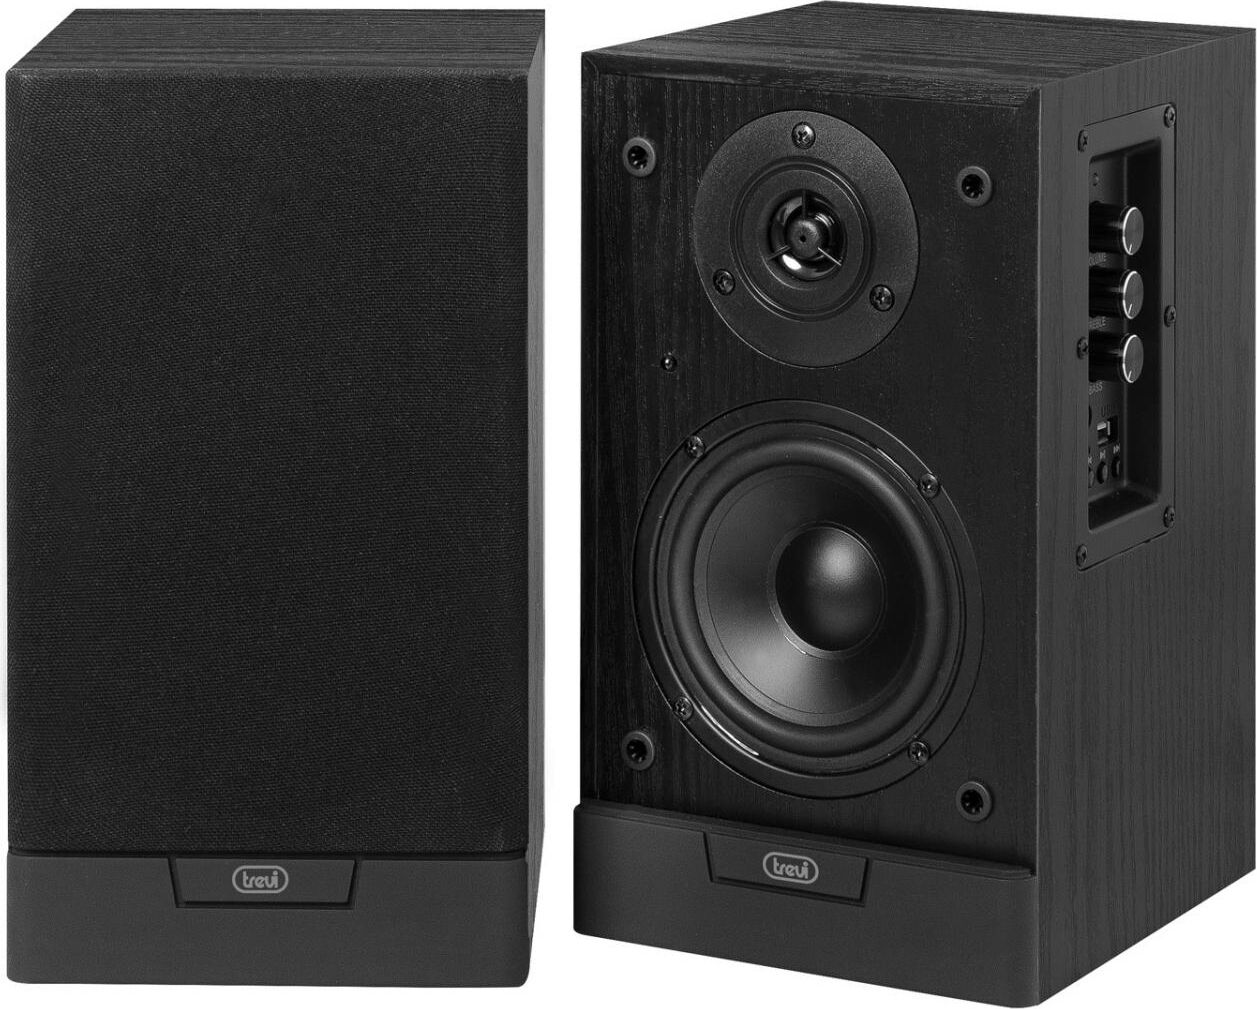 trevi avx 575 bt sistema di altoparlanti speakers bluetooth potenza 70 watt colore nero - avx 575 bt